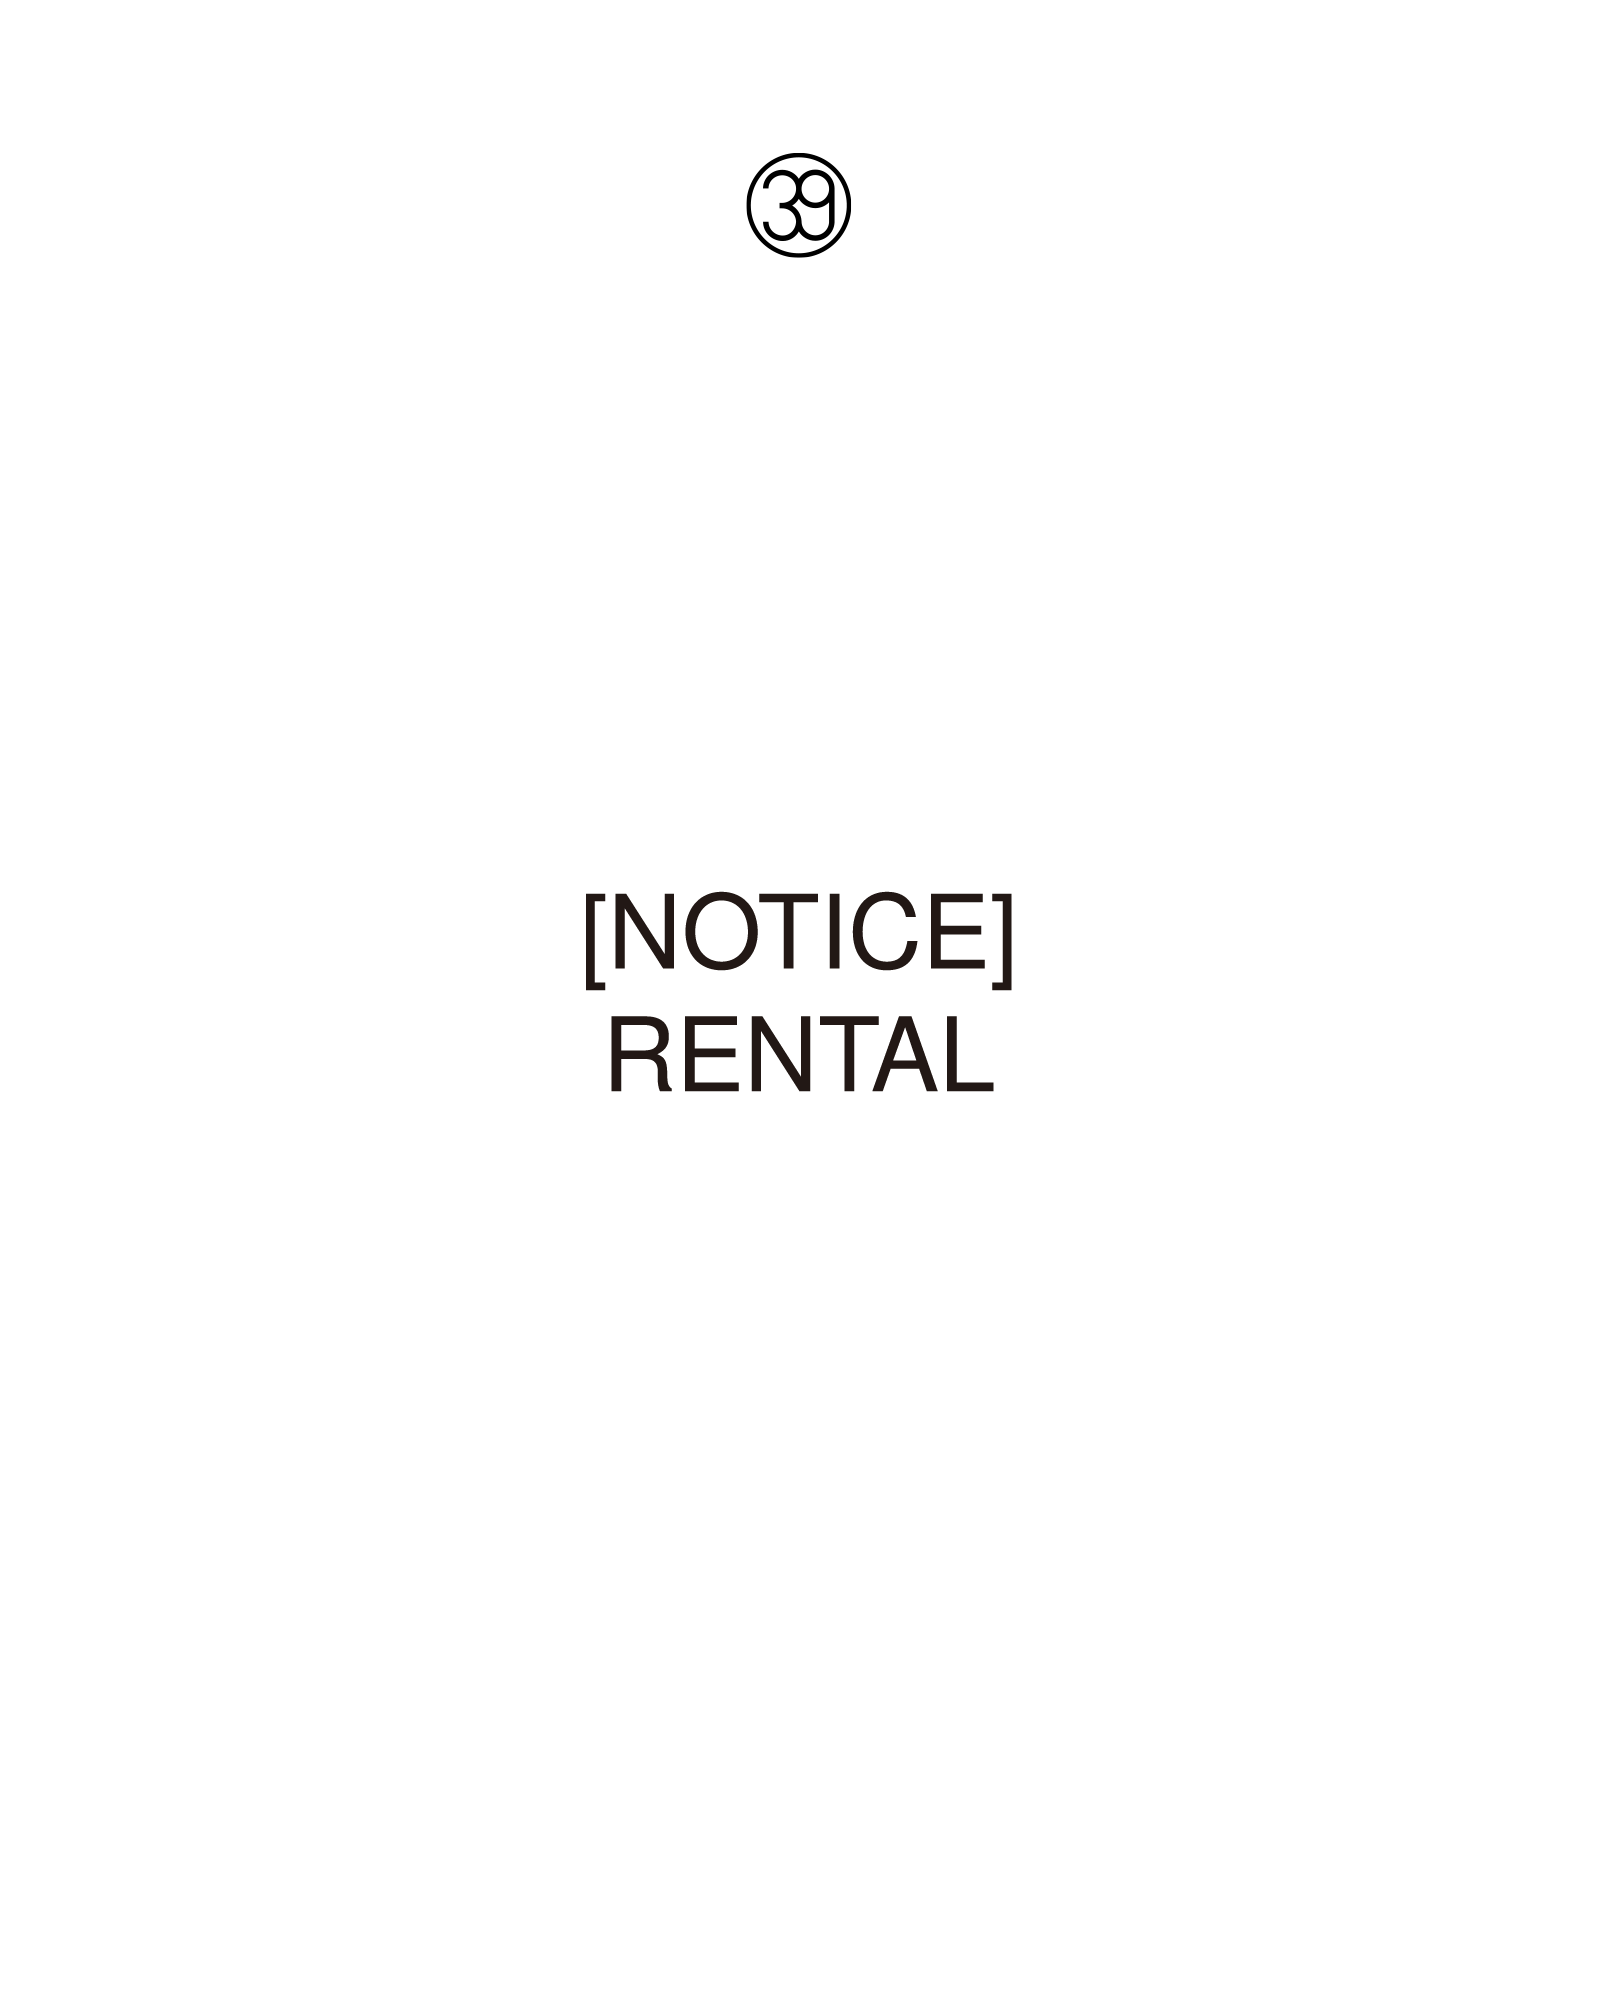 [Notice] RENTAL